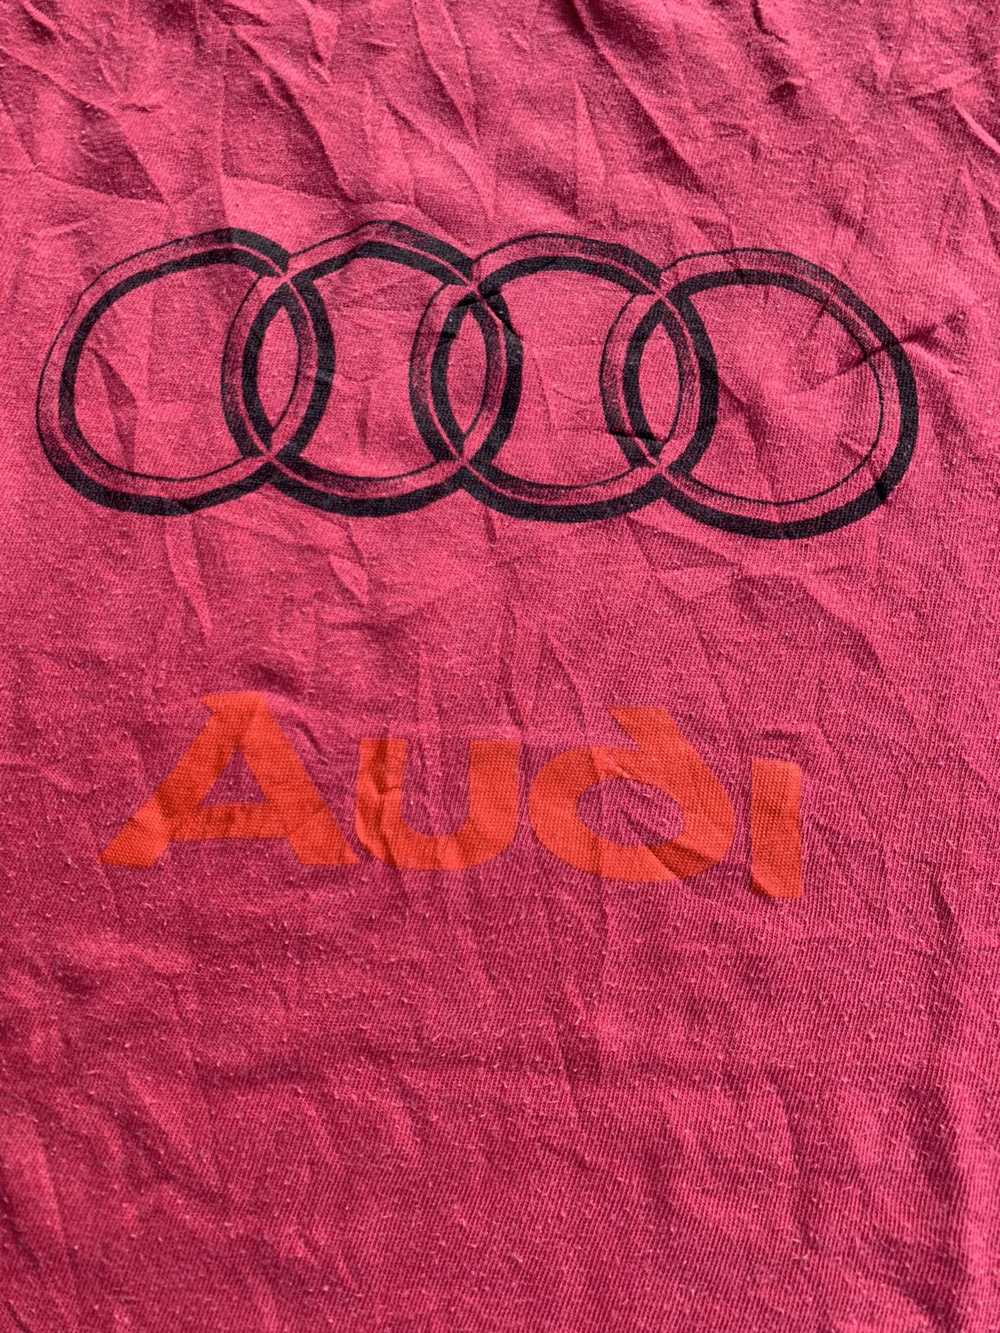 Audi × Racing Audi Logo - image 4